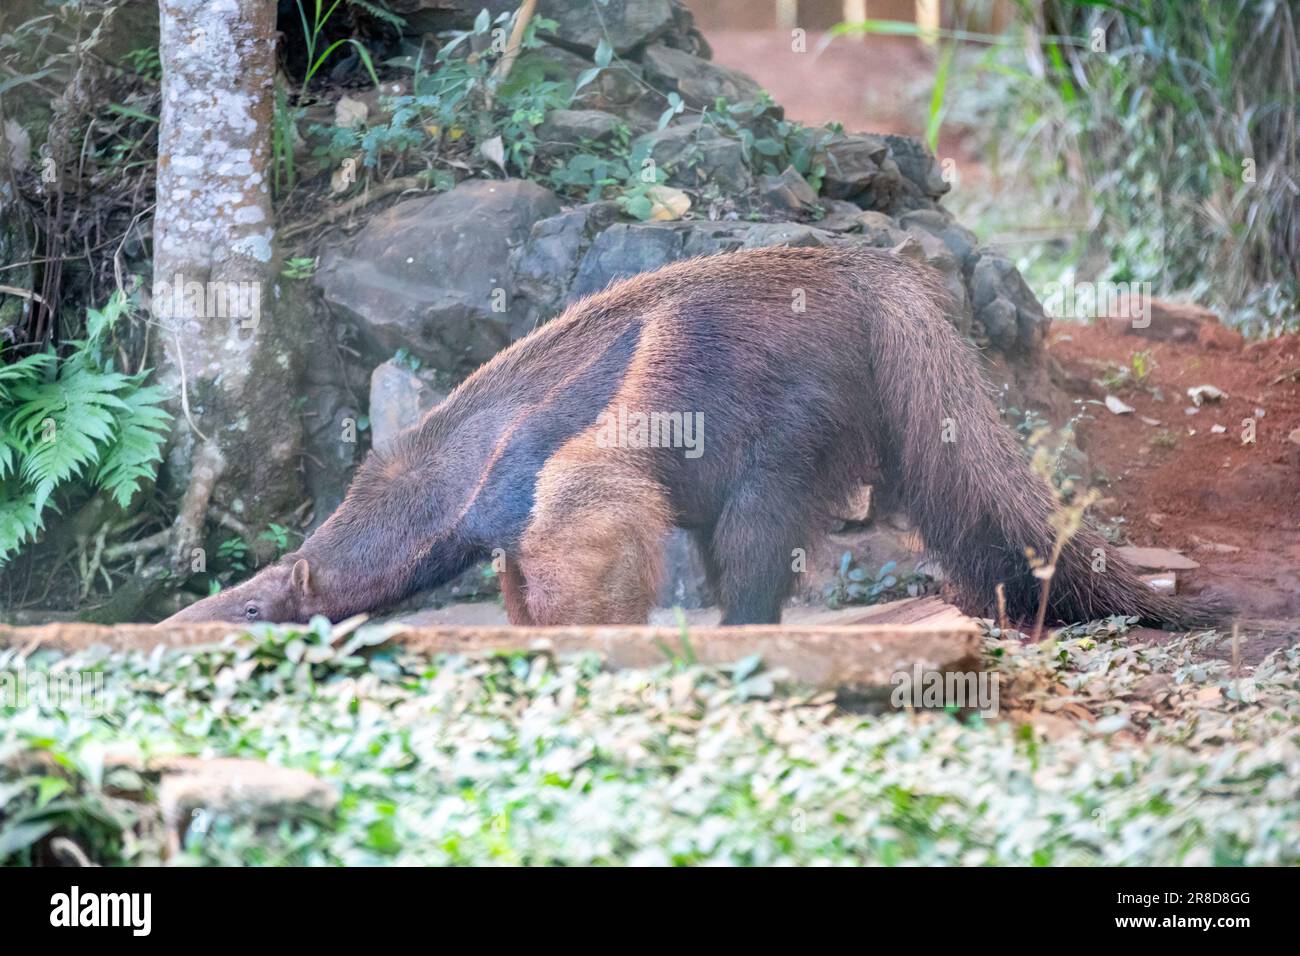 Giant anteater, cute animal from Brazil. Myrmecophaga tridactyla, exotic and endemic animal. Wildlife scene. Stock Photo